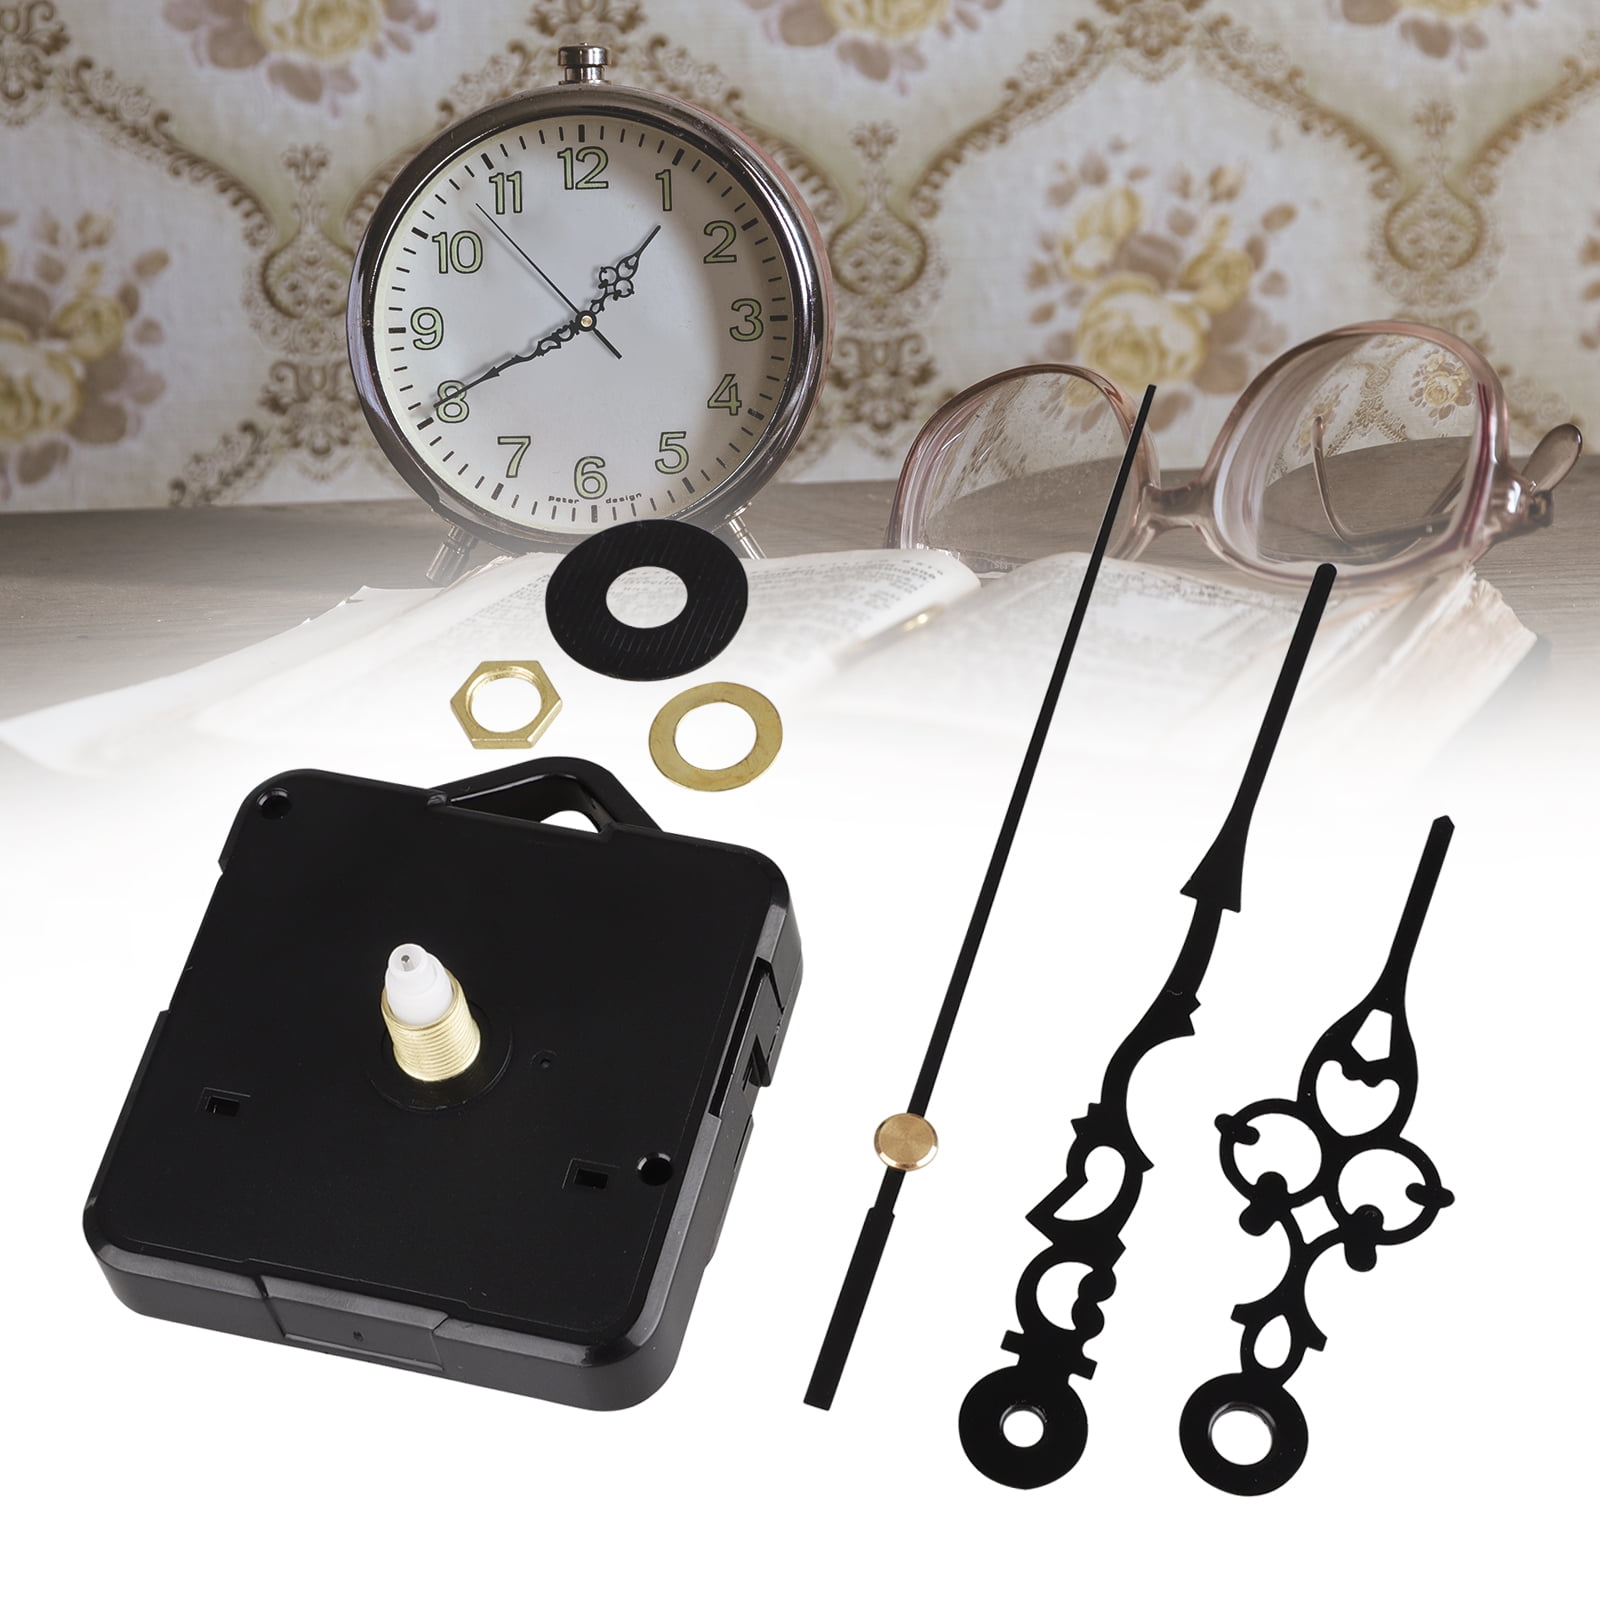 New replacement quartz clock movement mechanism motor & mount-DIY 